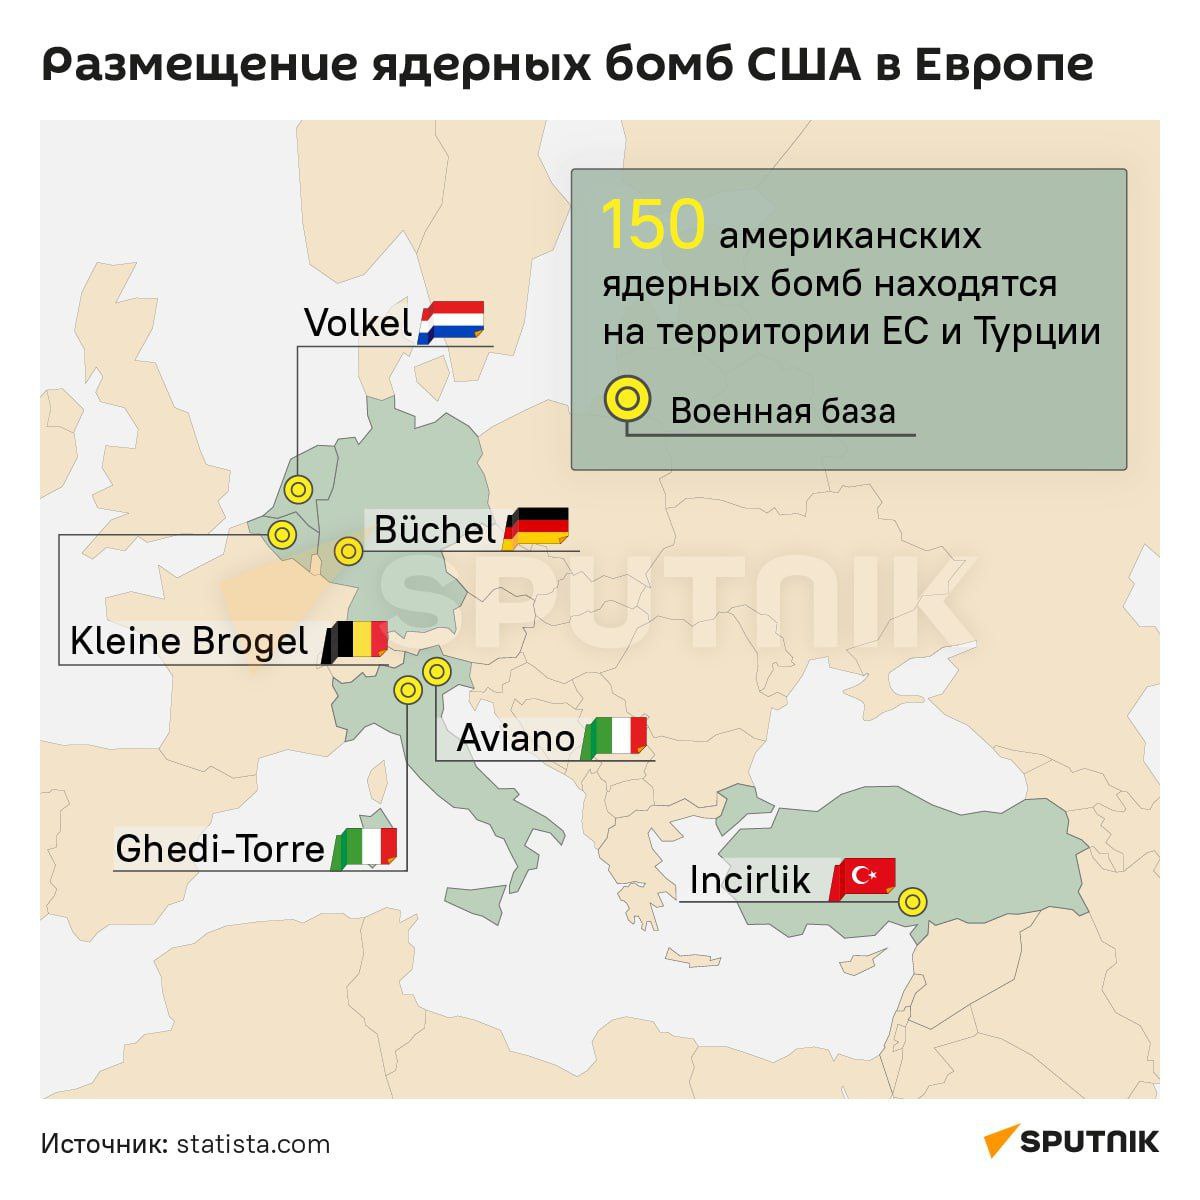 Nuklear Europe scheme